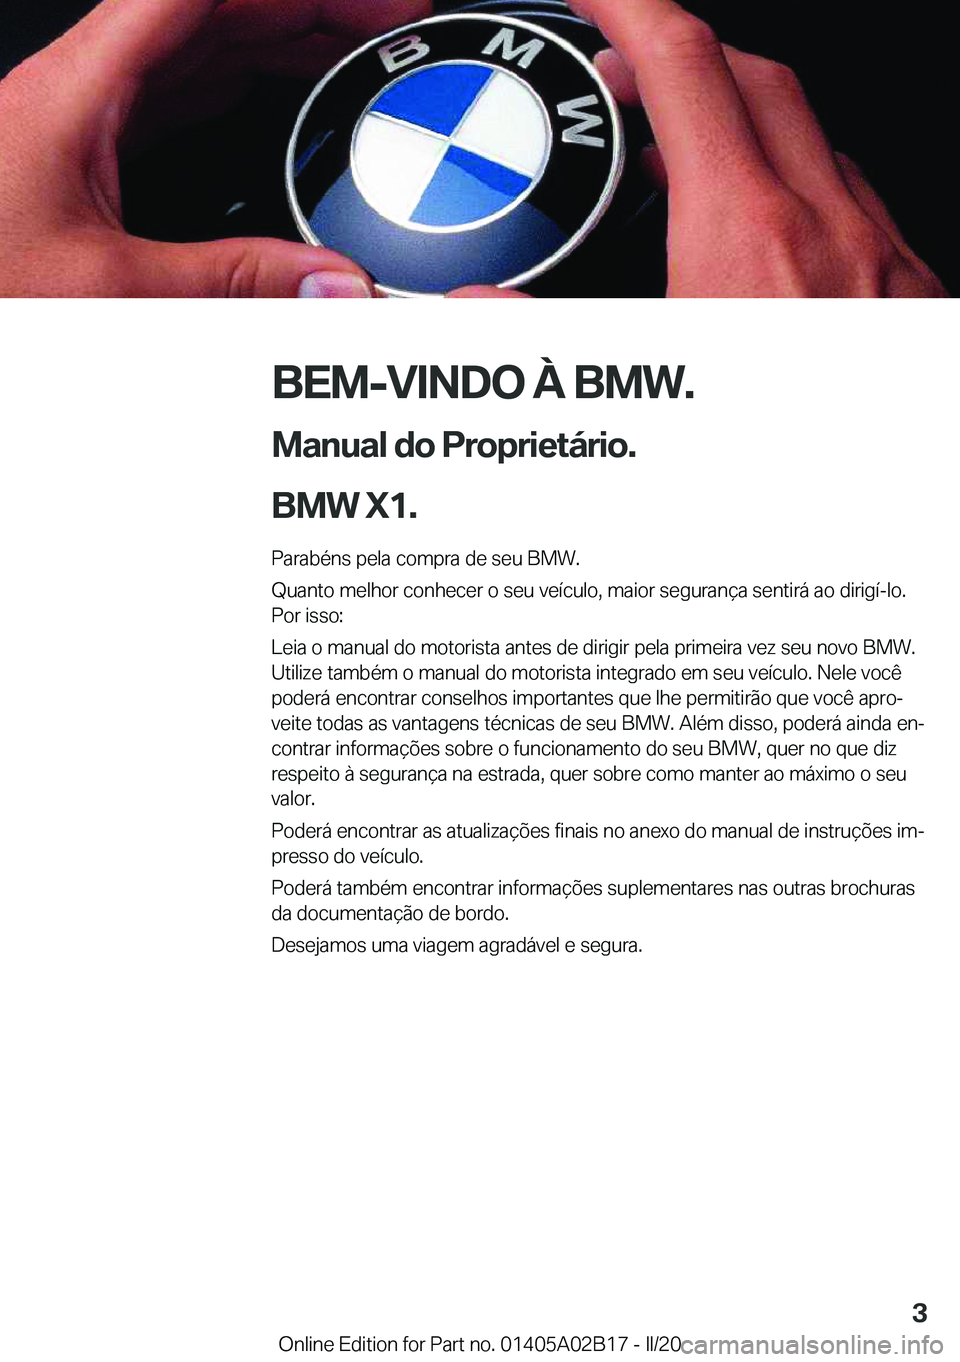 BMW X1 2020  Manual do condutor (in Portuguese) �B�E�M�-�V�I�N�D�O��À��B�M�W�.
�M�a�n�u�a�l��d�o��P�r�o�p�r�i�e�t�á�r�i�o�.
�B�M�W��X�1�. �P�a�r�a�b�é�n�s��p�e�l�a��c�o�m�p�r�a��d�e��s�e�u��B�M�W�.
�Q�u�a�n�t�o��m�e�l�h�o�r��c�o�n�h�